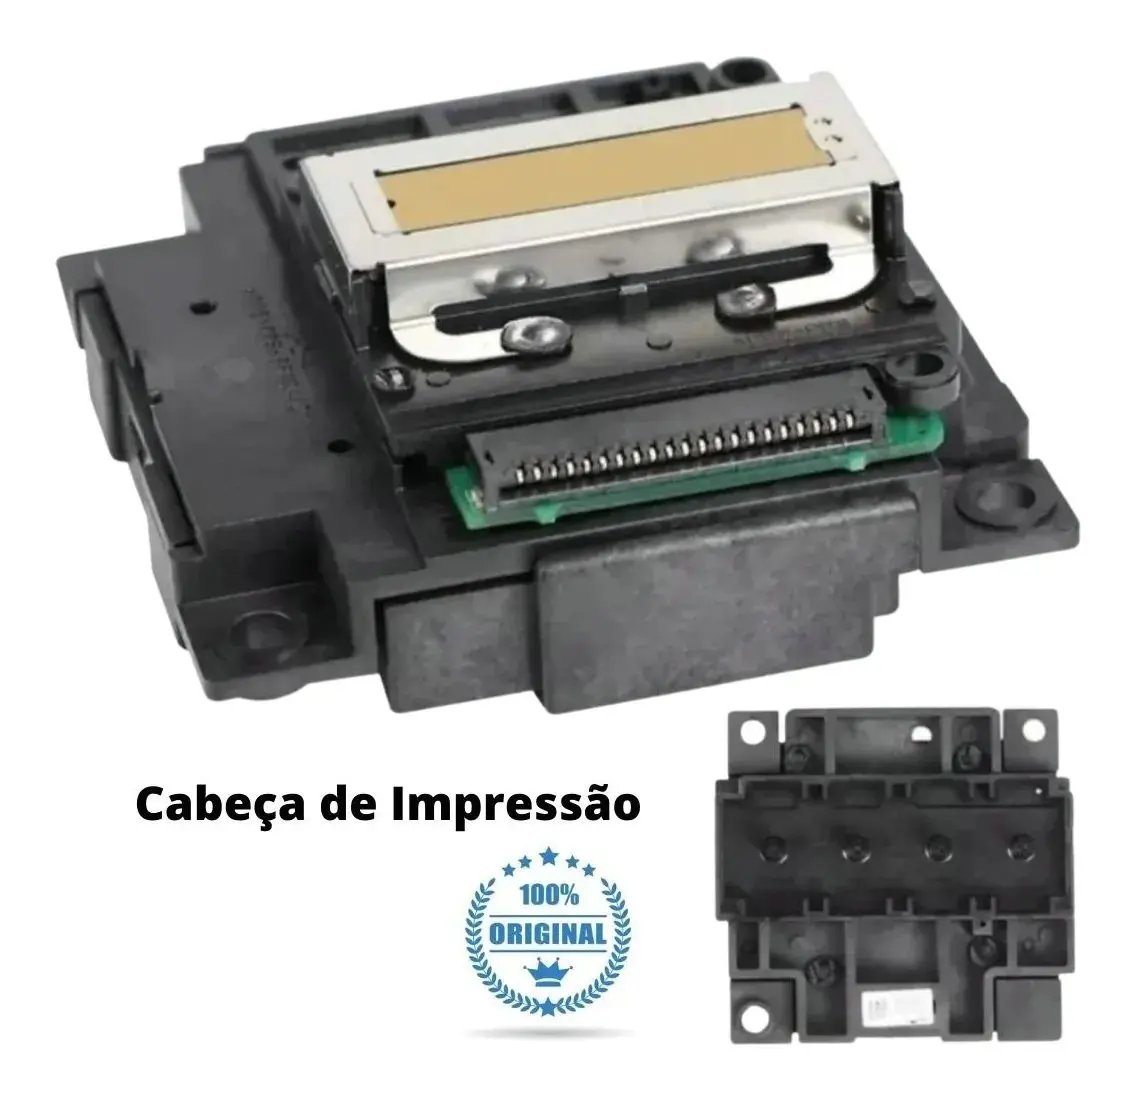 

Печатающая головка Epson, печатающая головка для Epson L121, L301, L351, L355, L358, L120, L210, L211, ME401, ME303, XP 302, 2010, L300, FA04010, FA04000